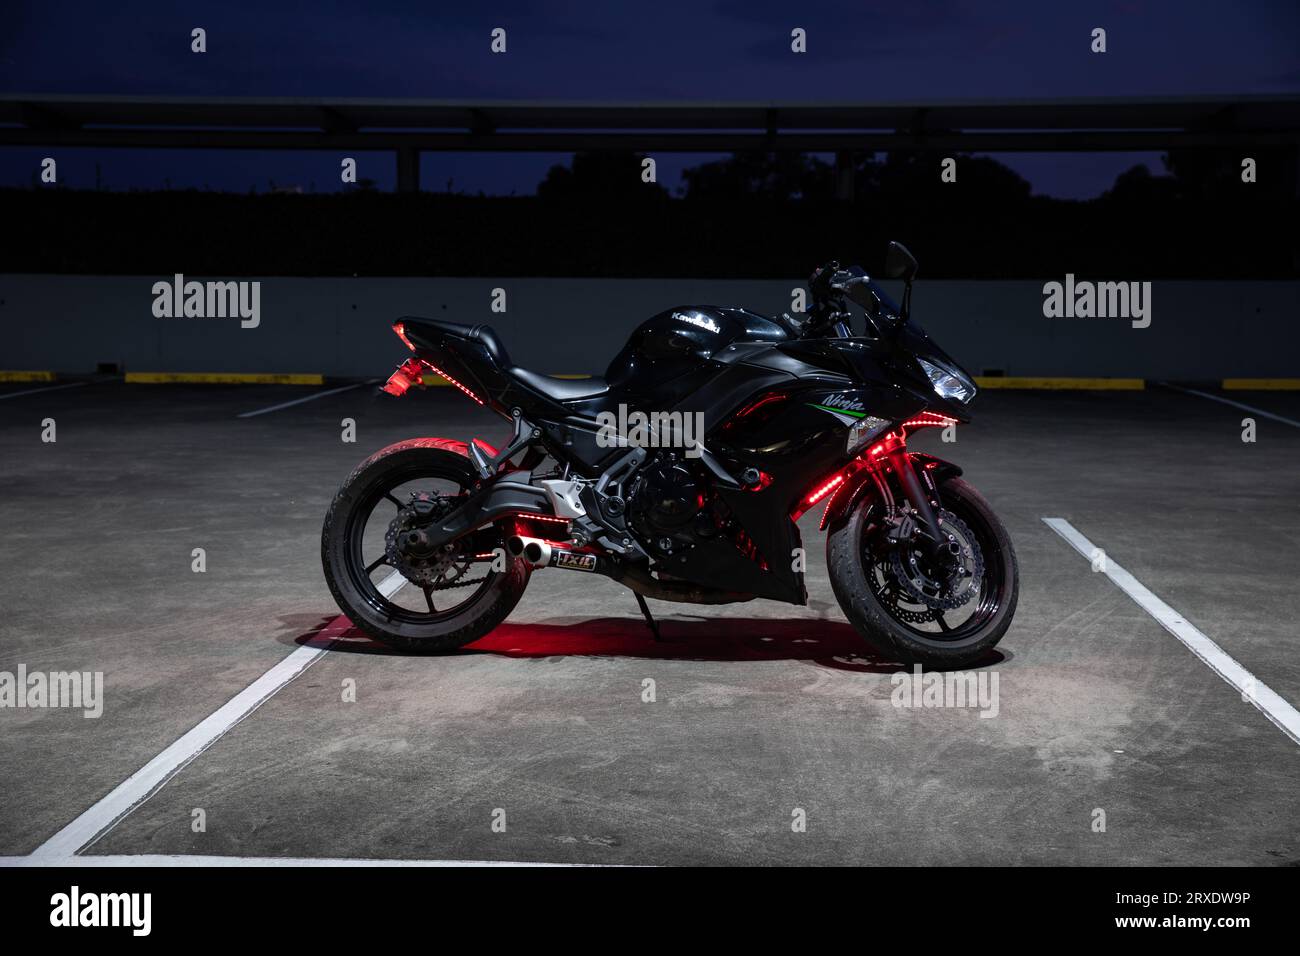 Kawasaki Z750 motorcycle Stock Photo - Alamy